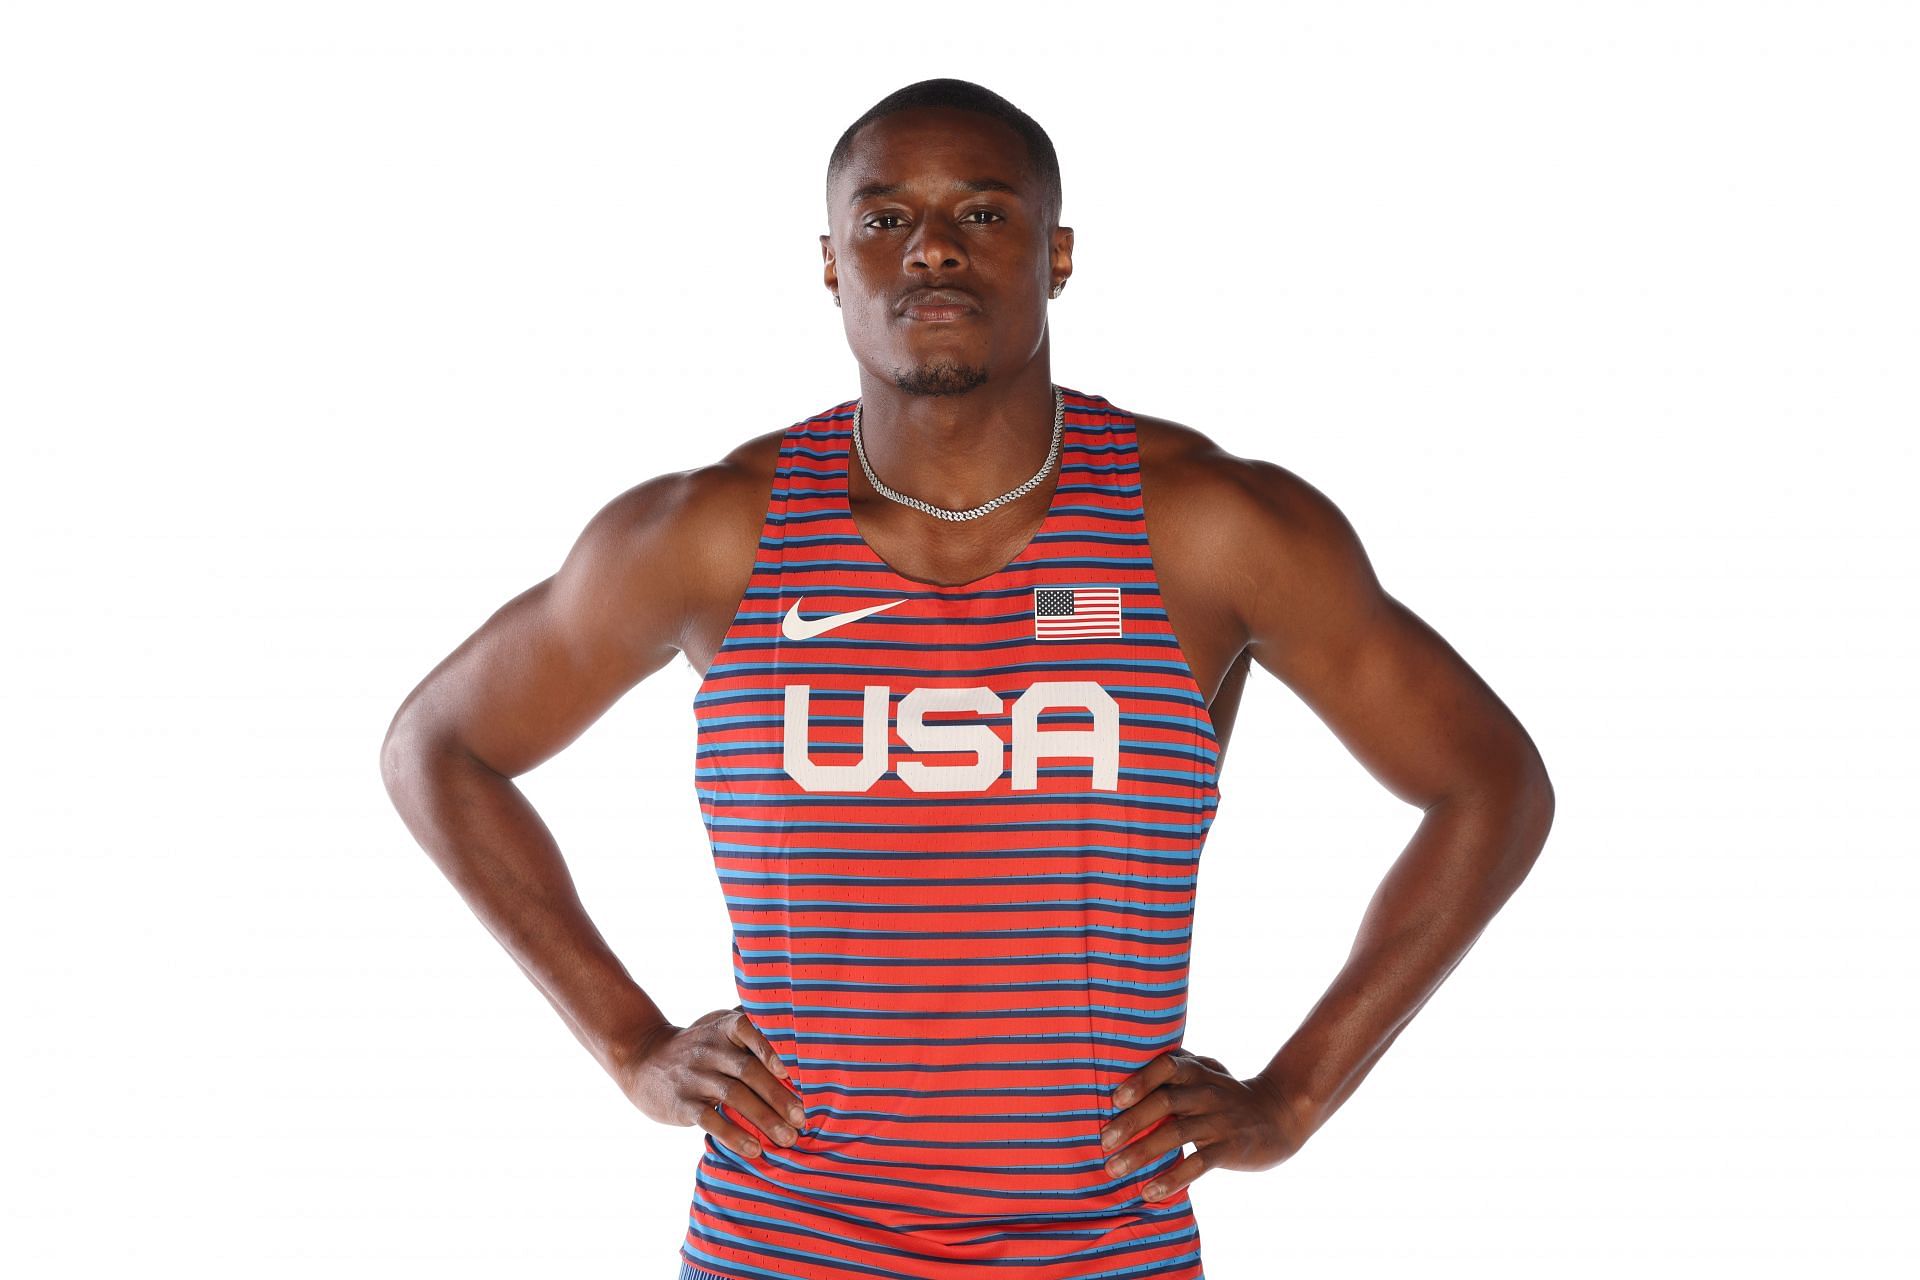 Team USA Olympic Portrait Shoot